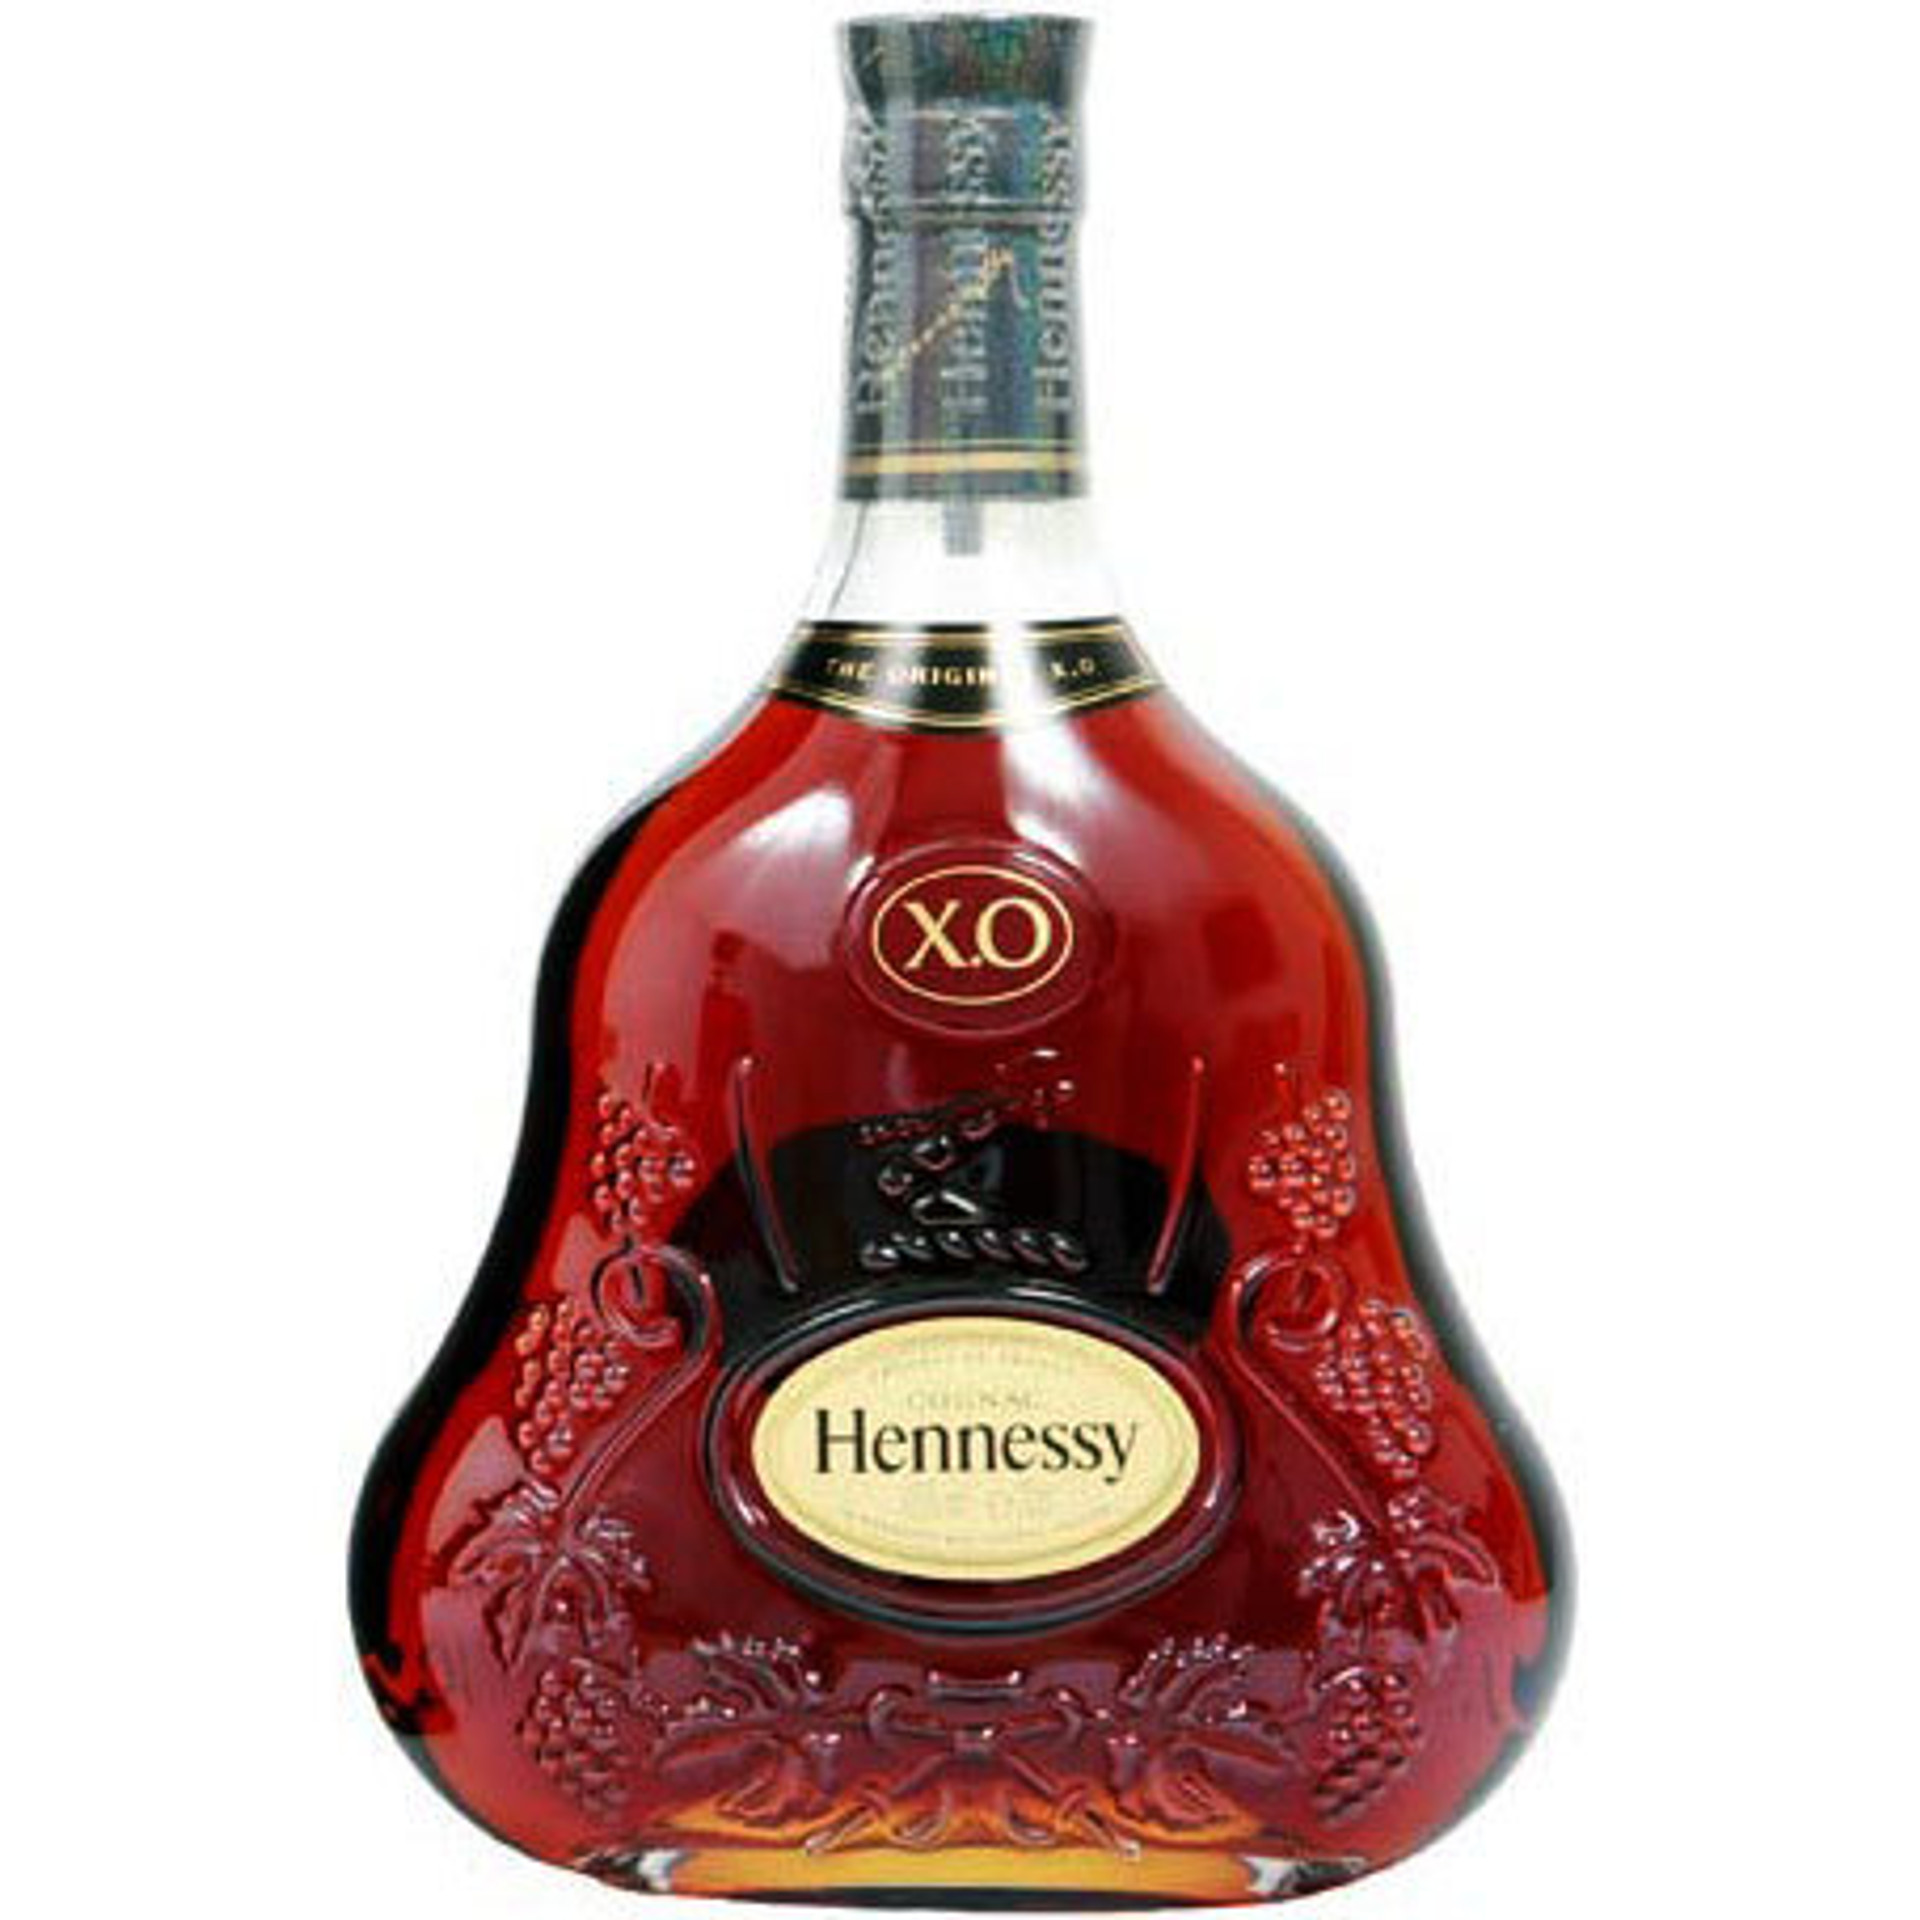 Hennessy Vs 375ml